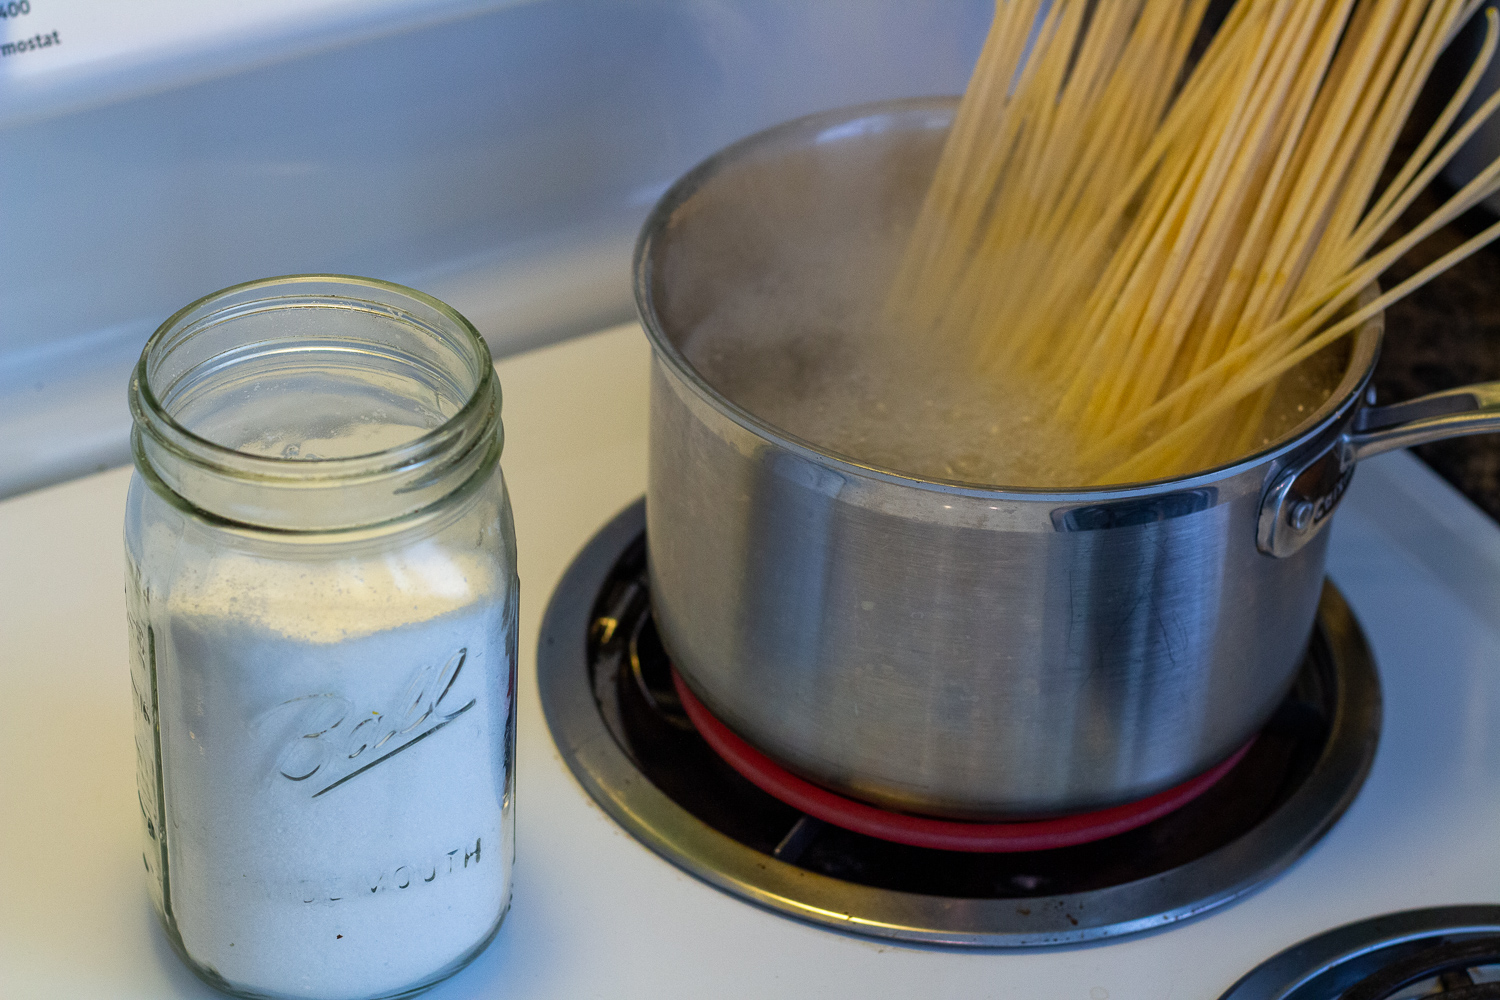 Best salt for cooking pasta